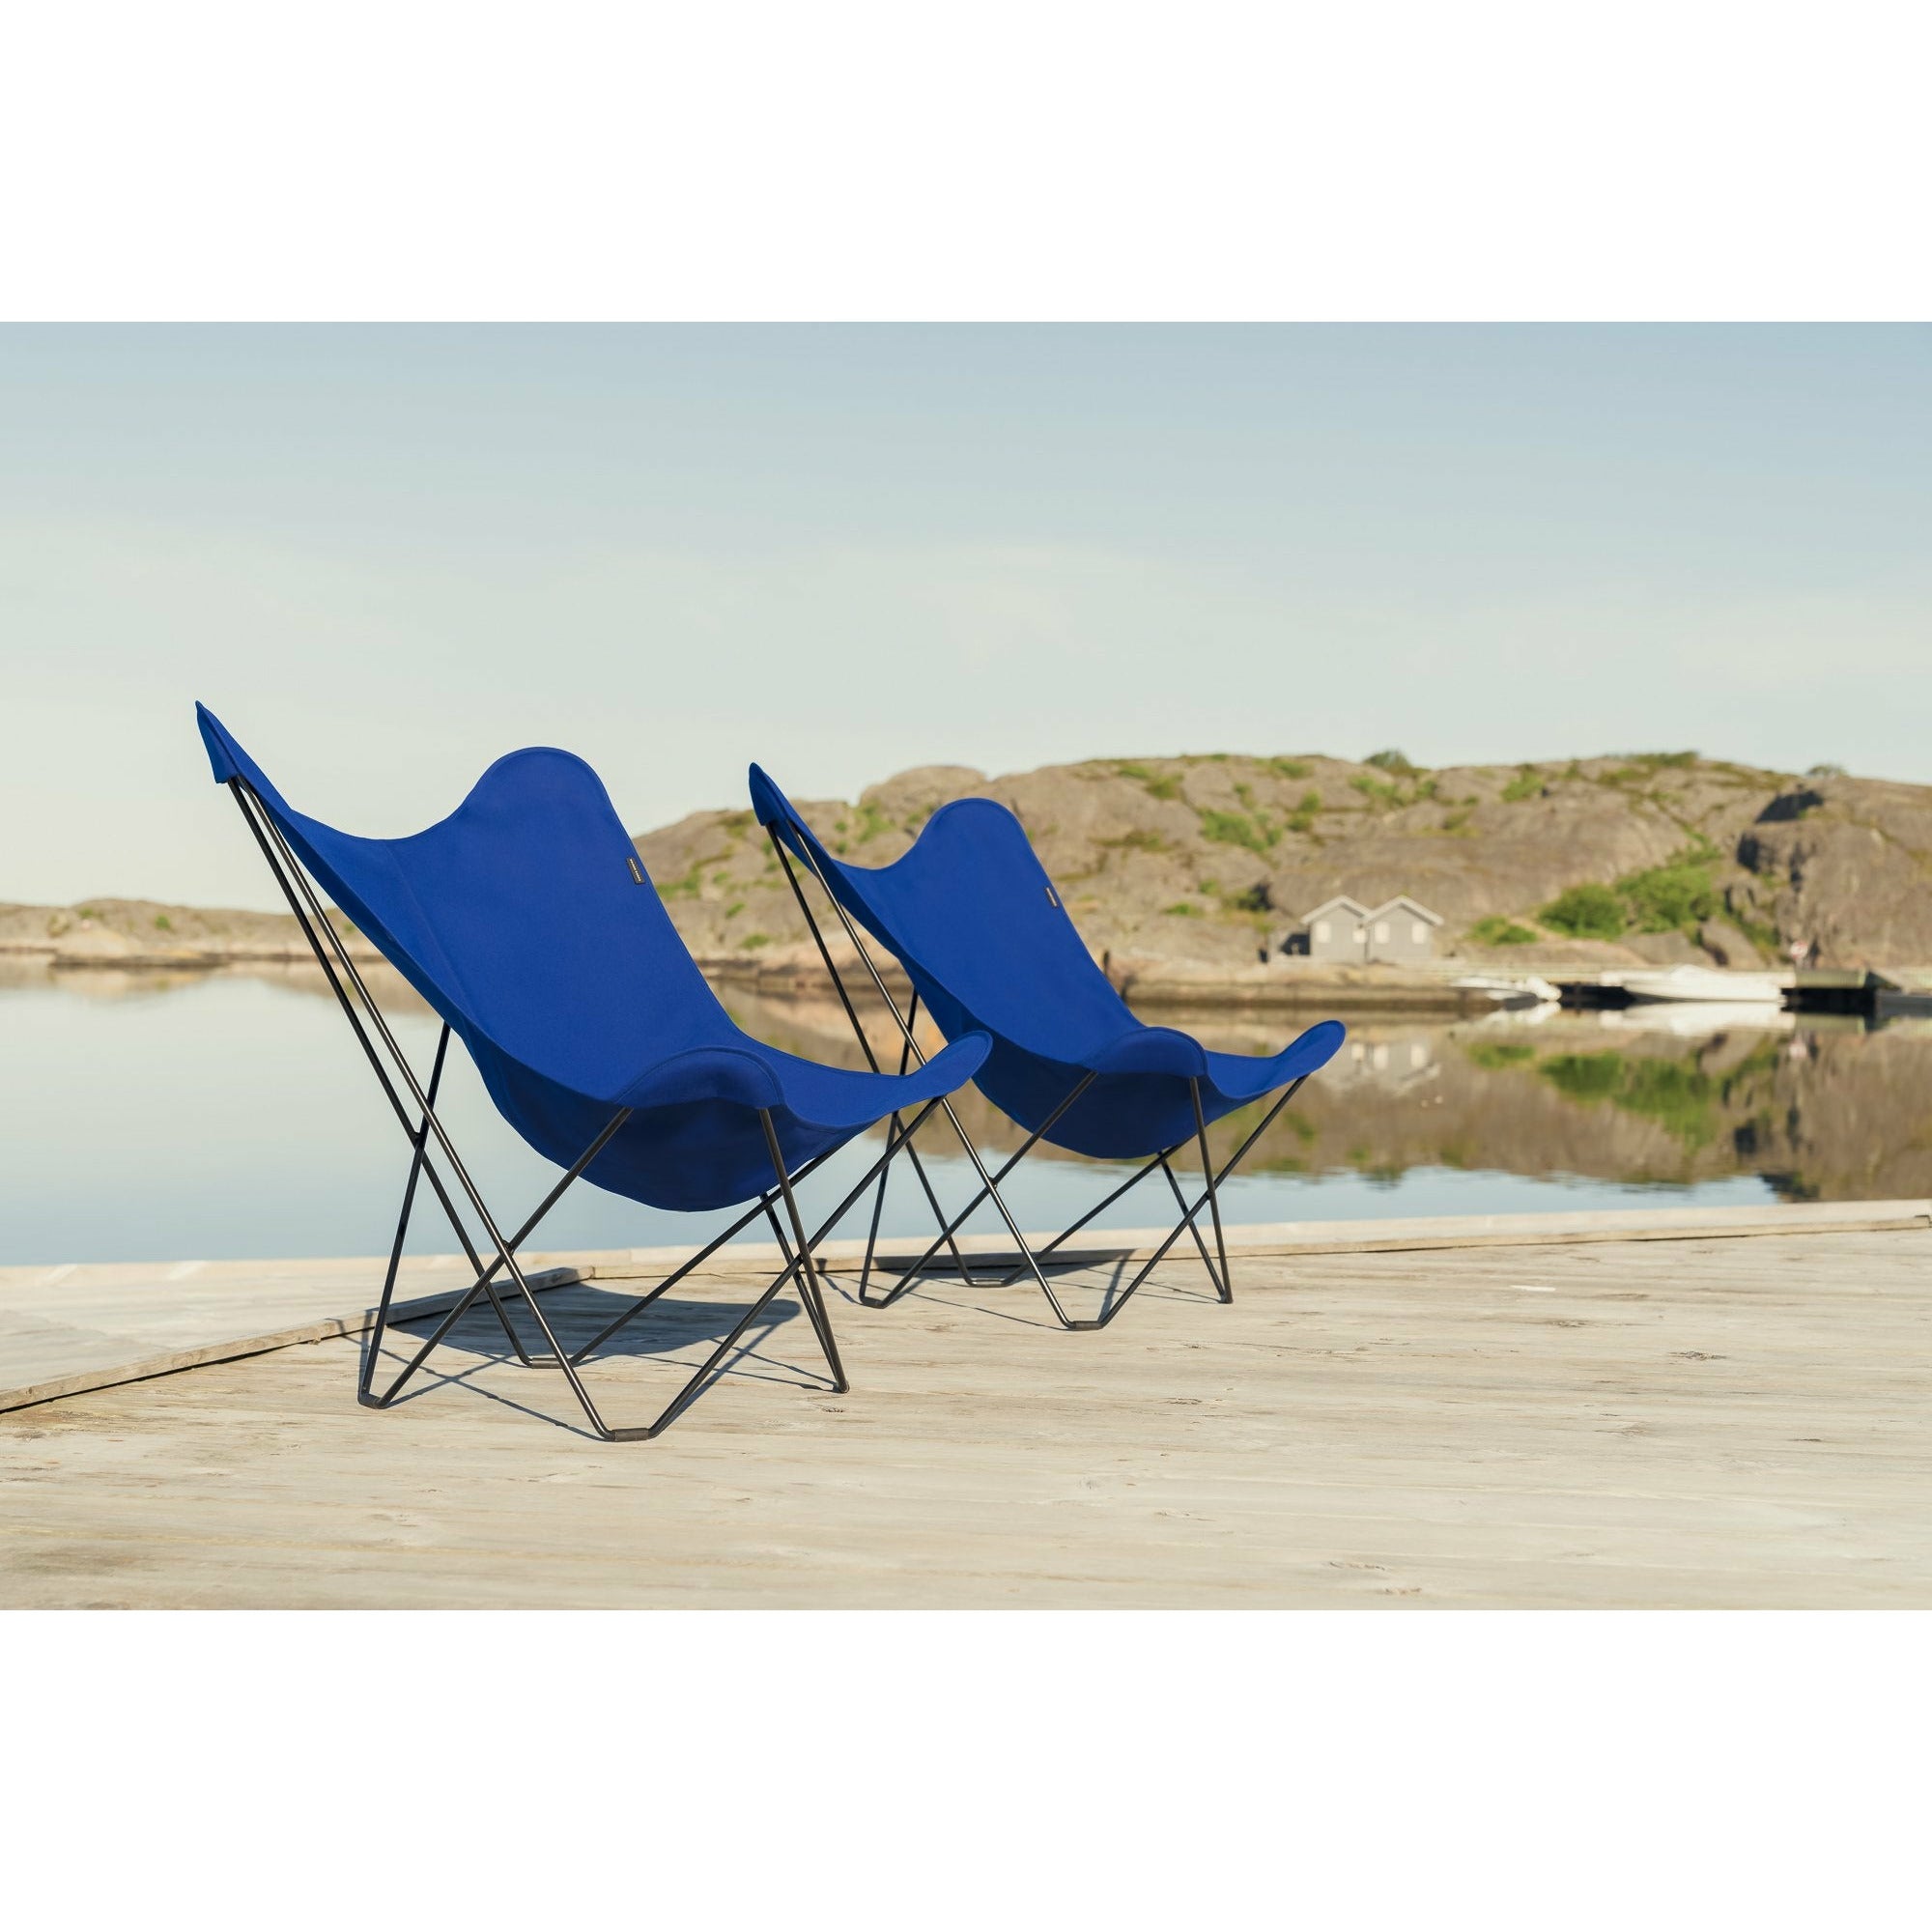 Cuero Sunshine Mariposa Butterfly Chair, Atlantic Blue/Black Galvanised